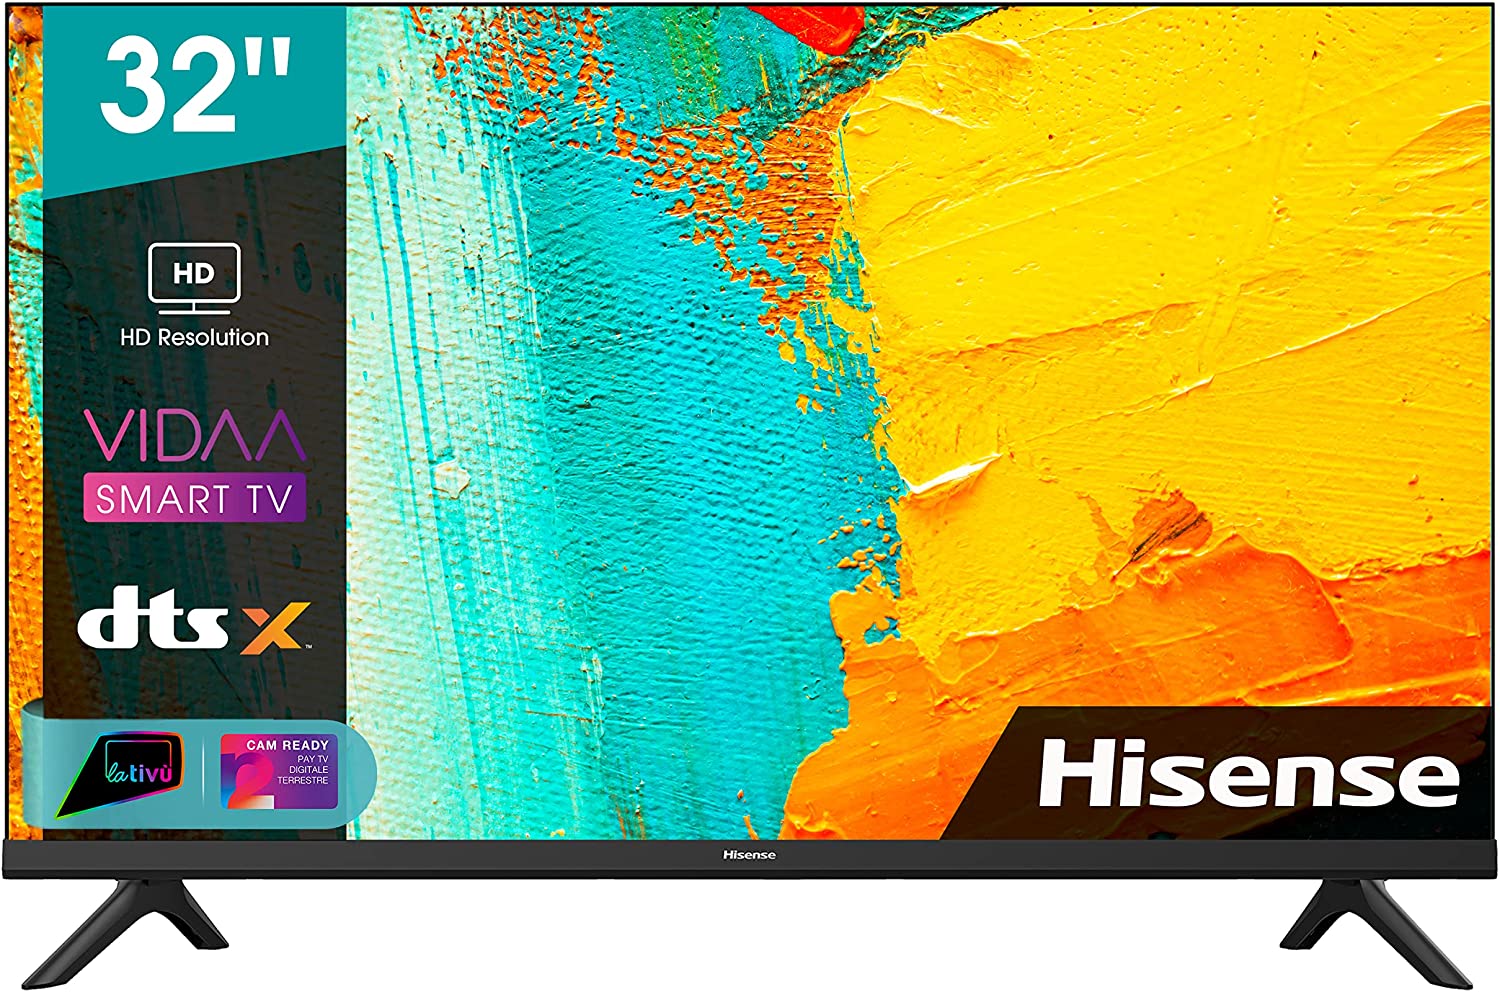 Smart TV Hisense - 32 pollici HD